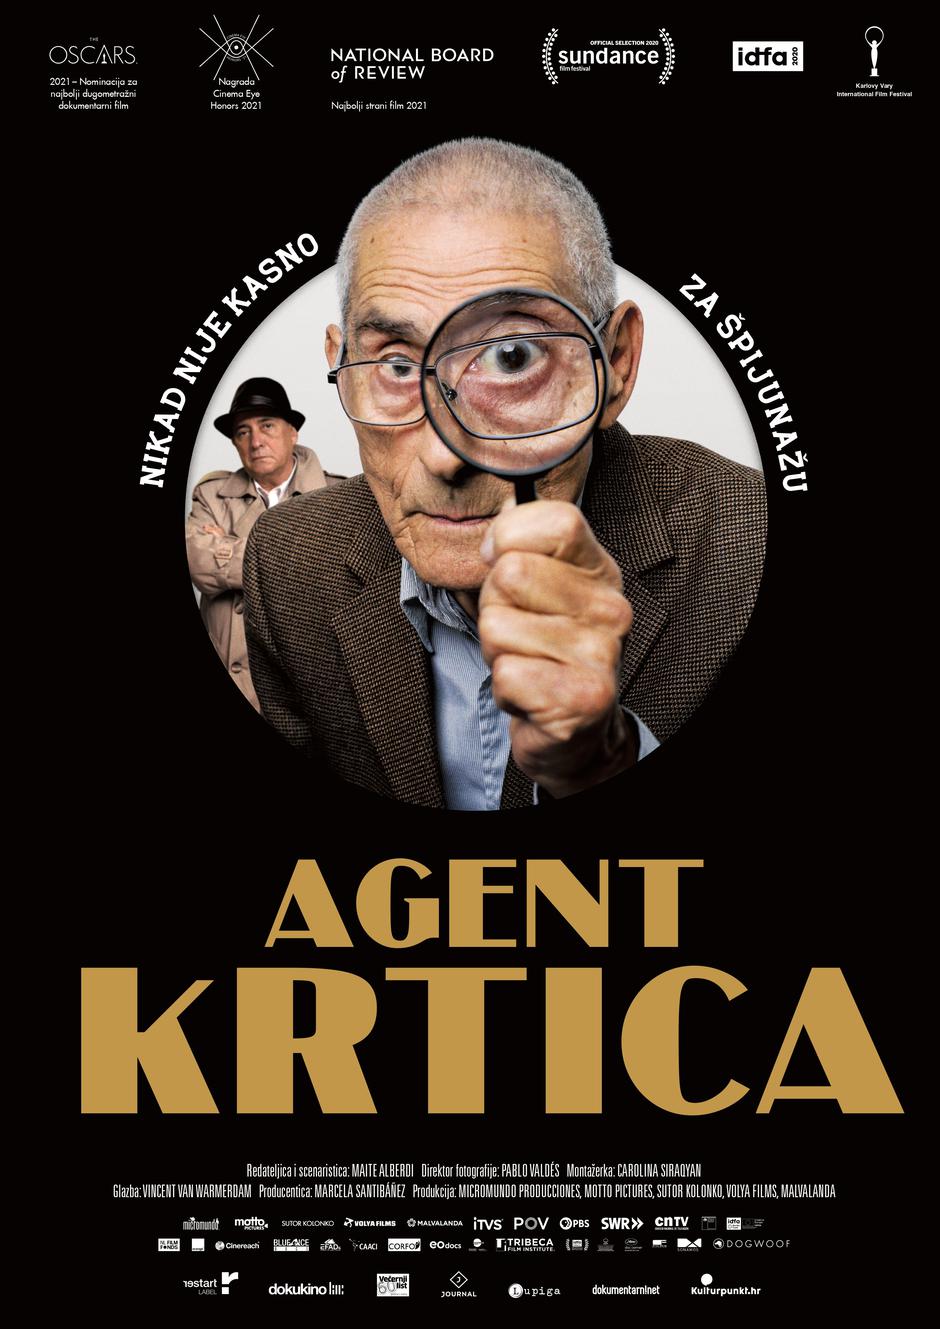 Agent krtica